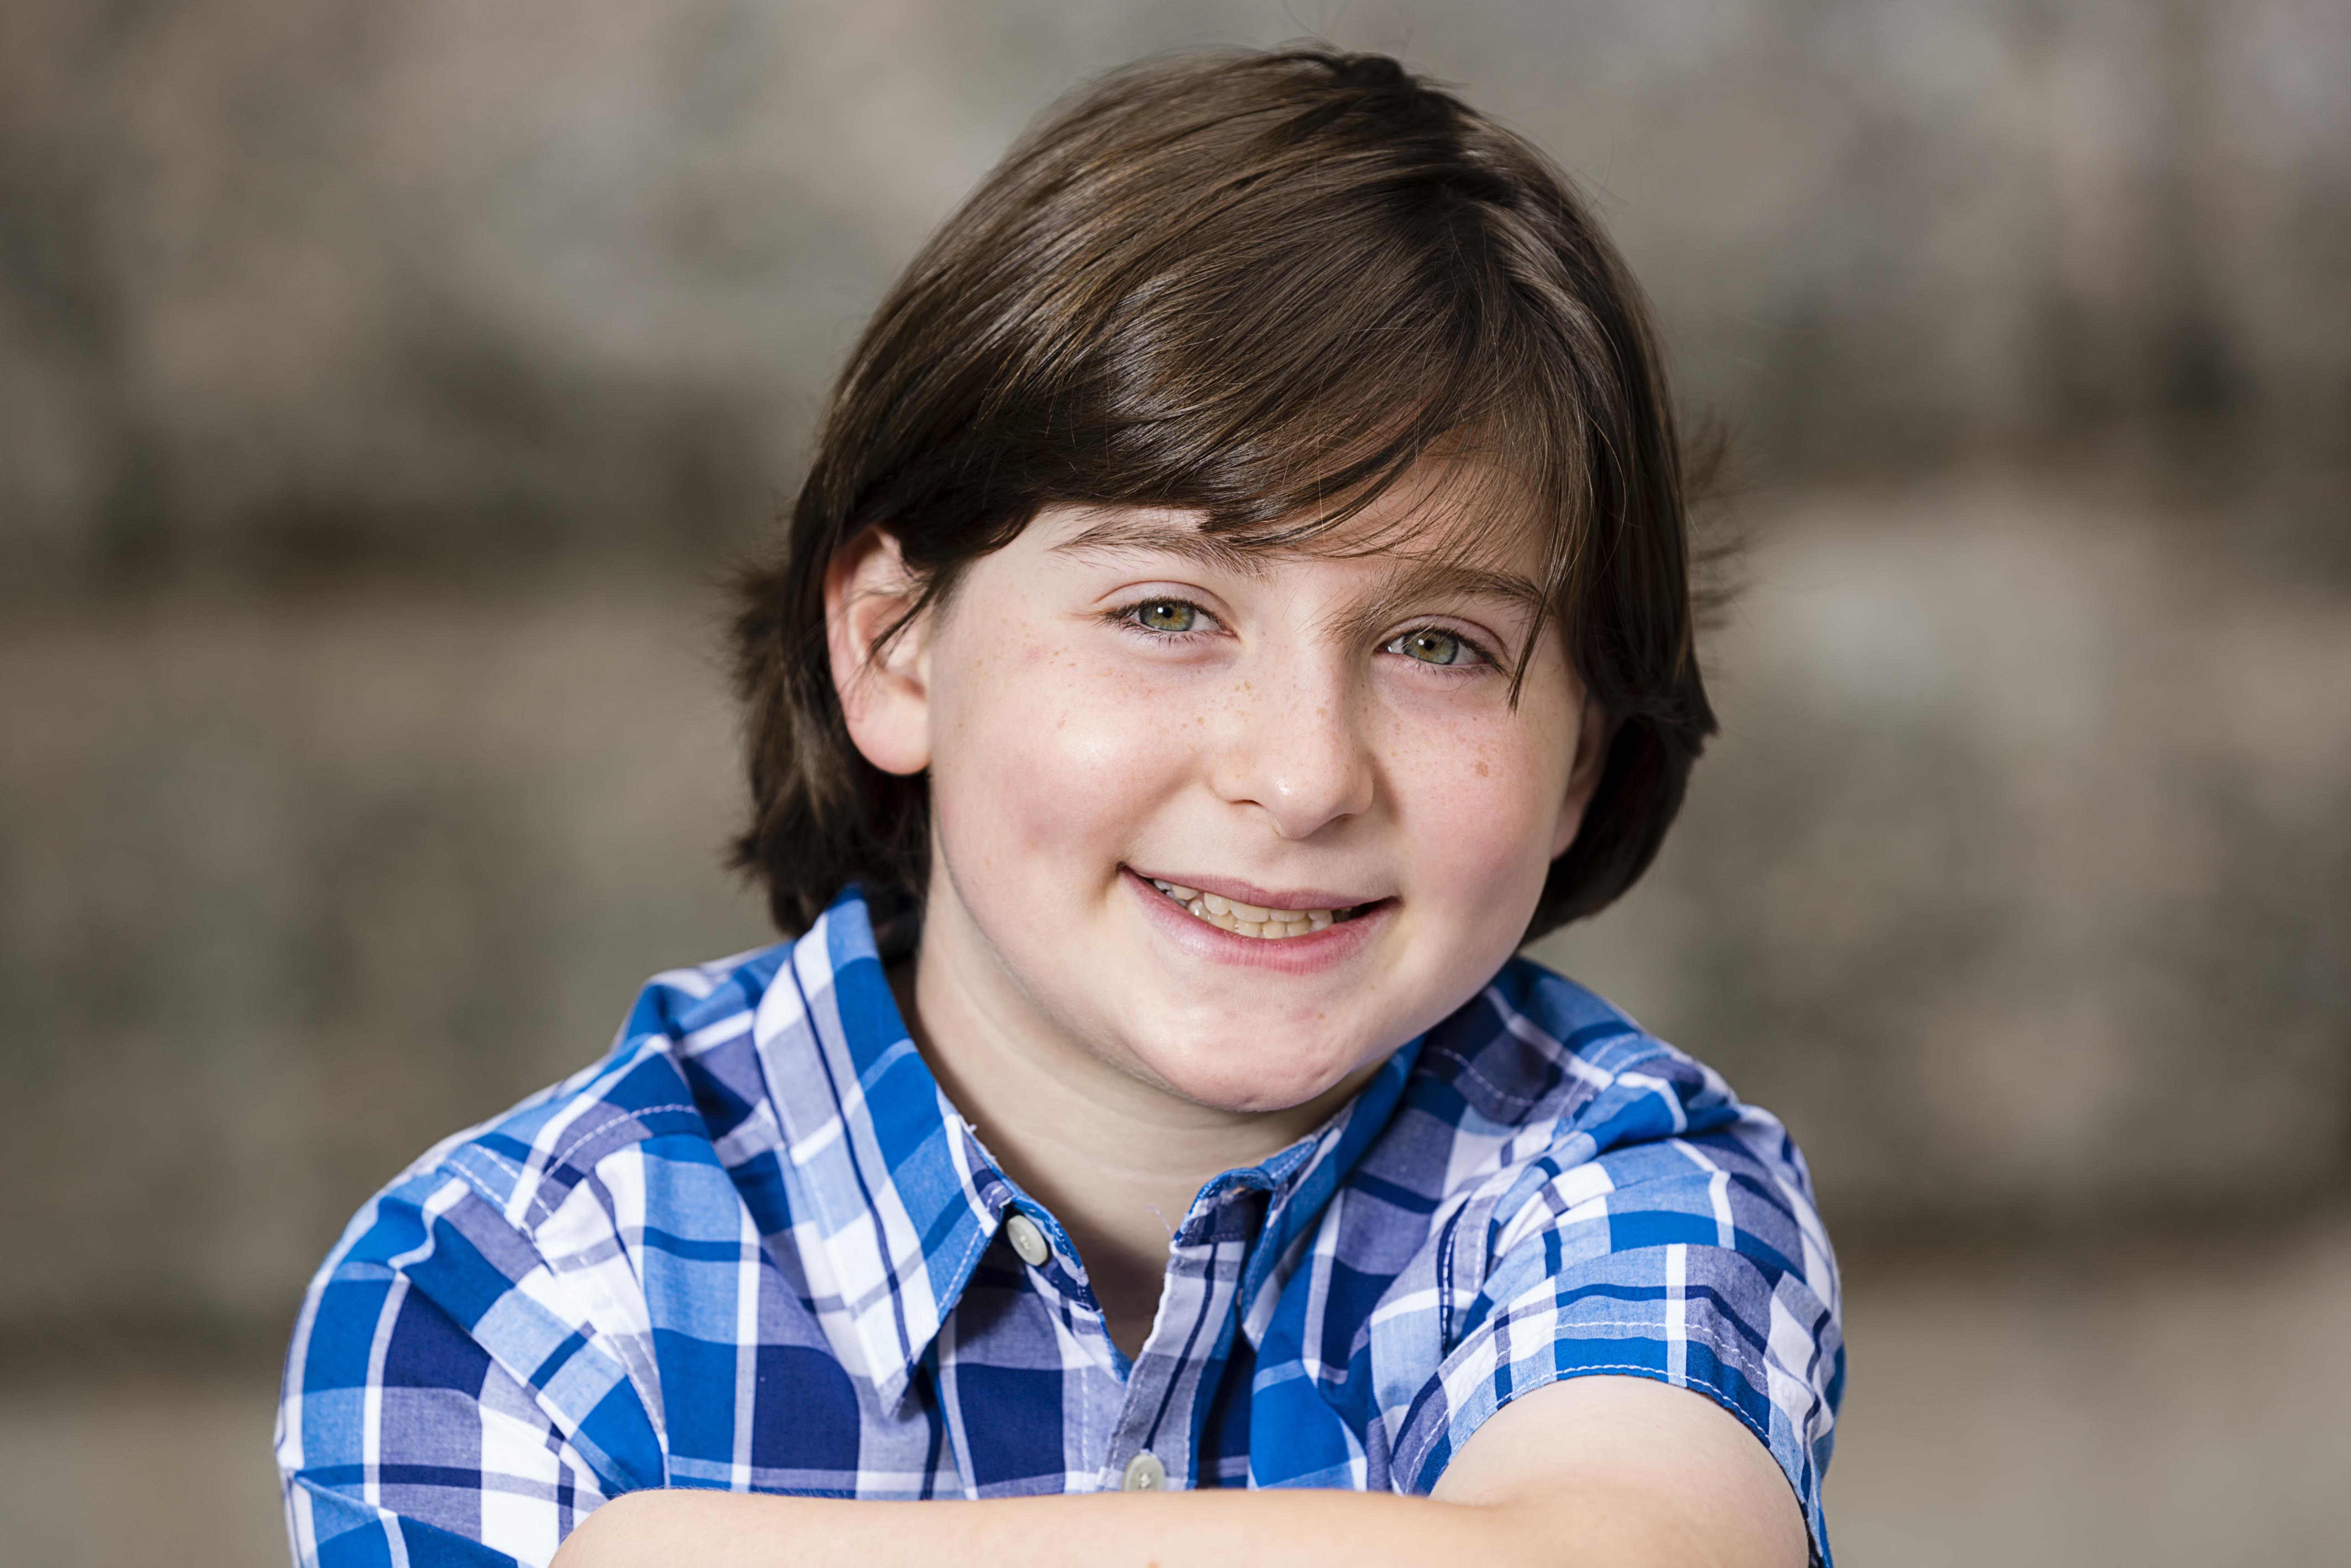 Child actor smiling